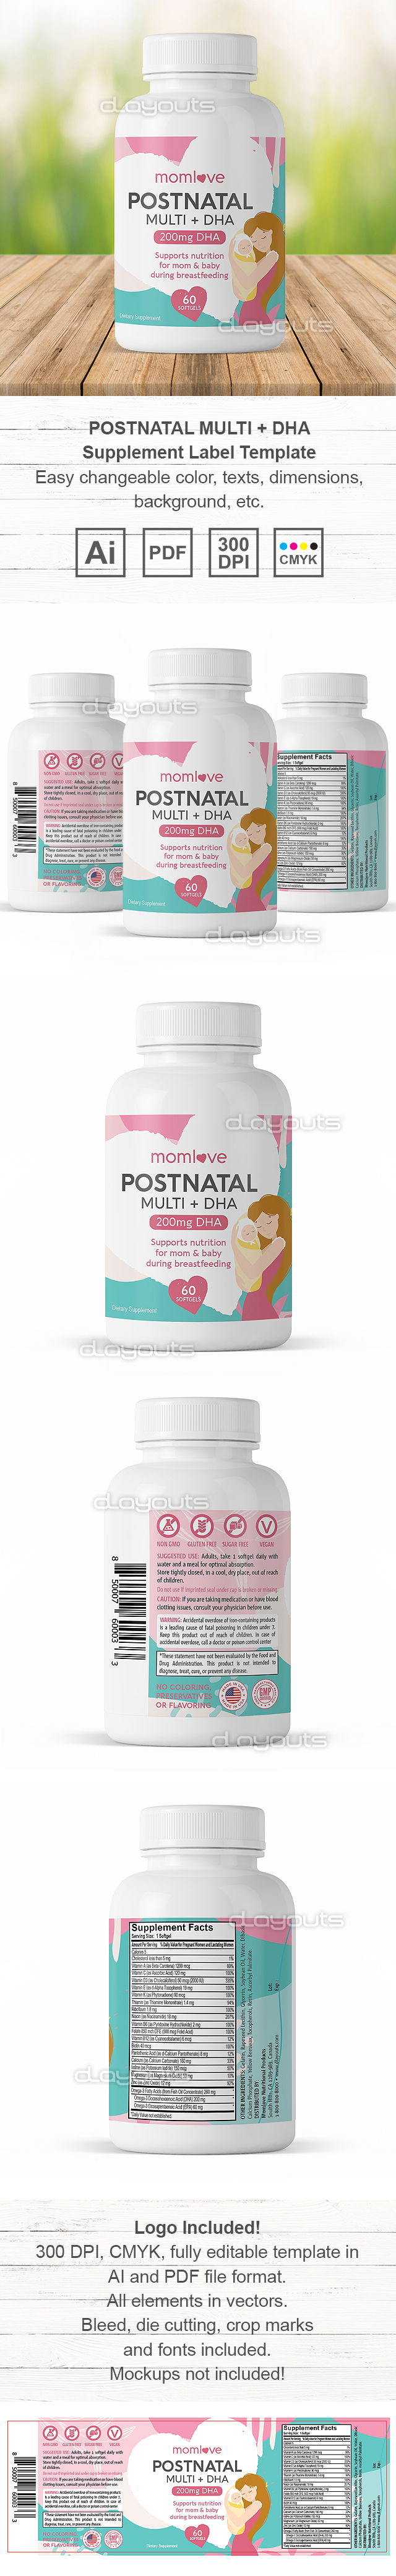 Postnatal Multi + DHA Supplement Label Template